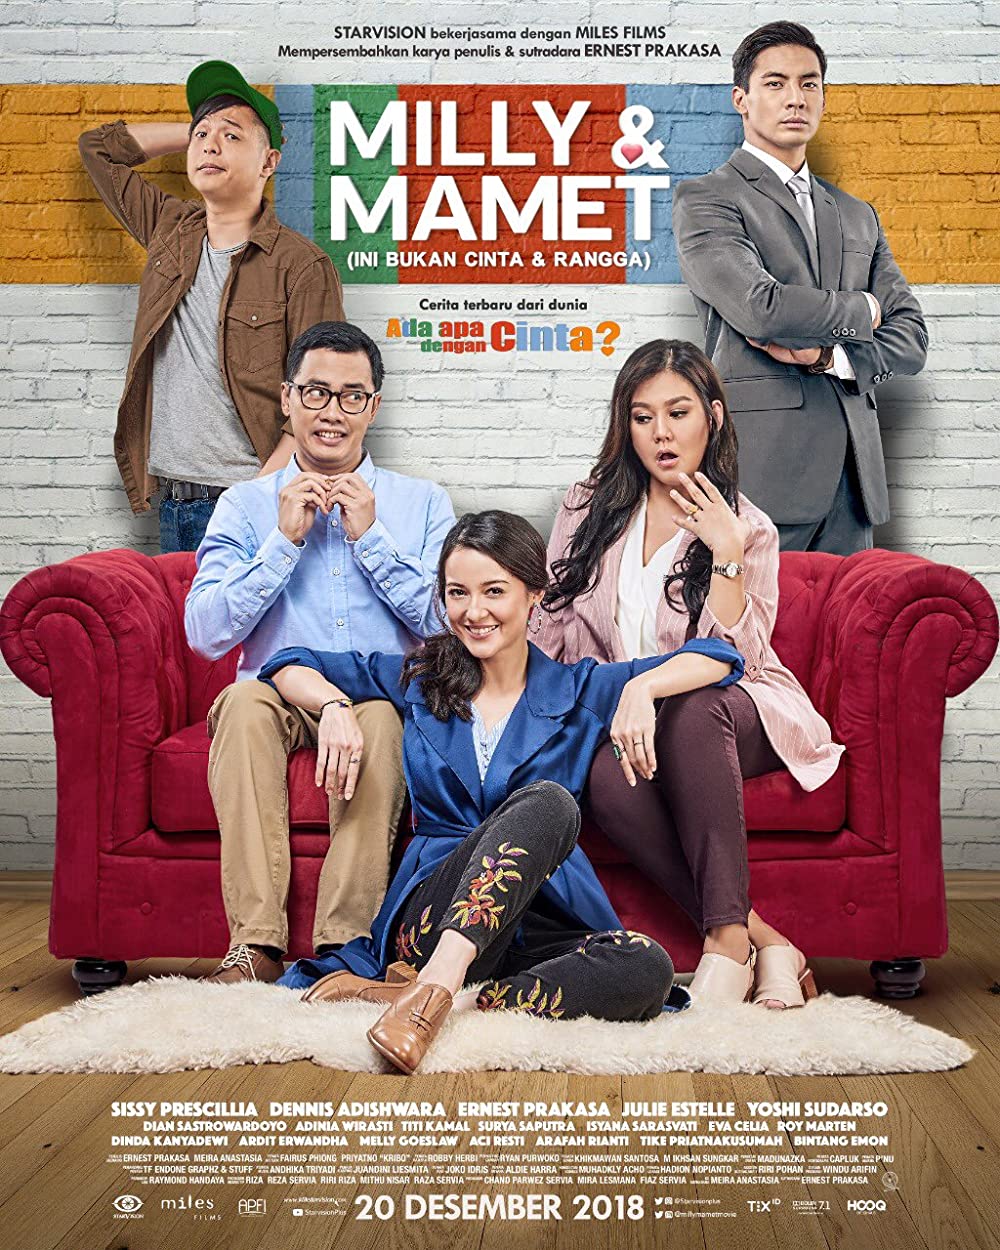 6 Rekomendasi Film Komedi Romantis Indonesia Seru Bikin Ketawa Sekaligus Baper 